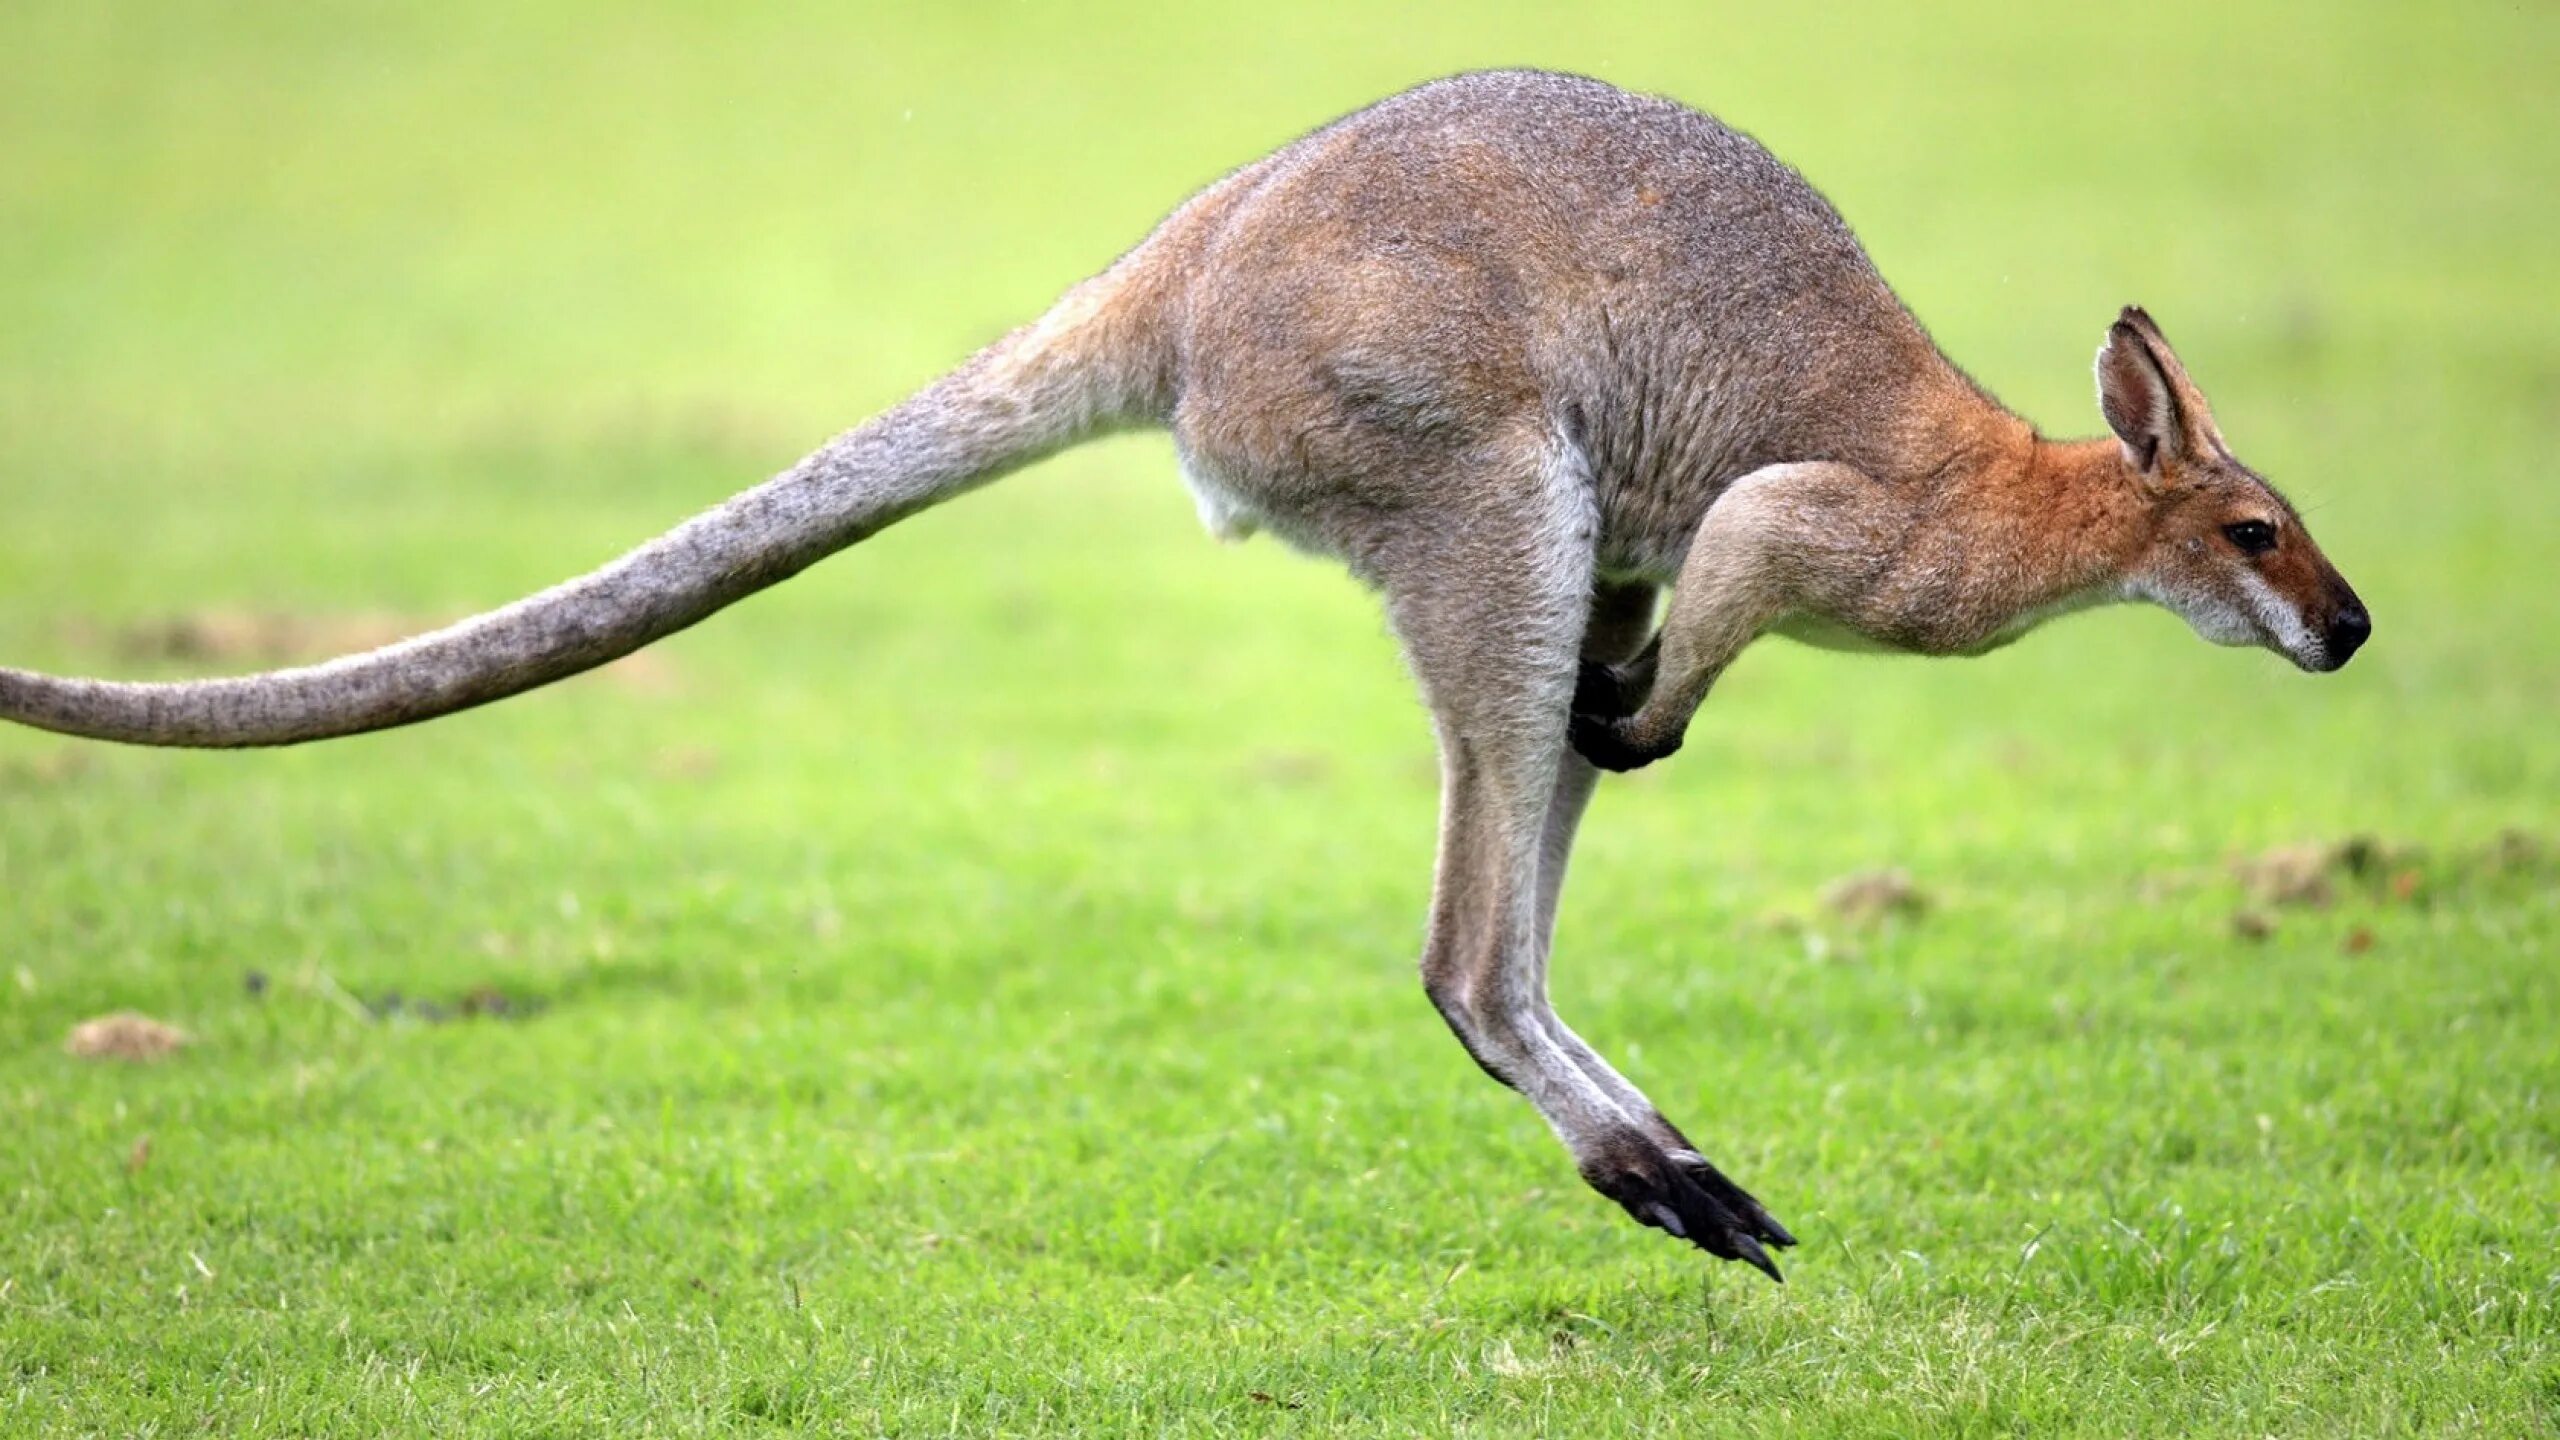 Сумчатые кенгуру. Кенгуру в Австралии. Сумчатые кенгуру в Австралии. Валлаби Австралия. Язык длиннее хвоста